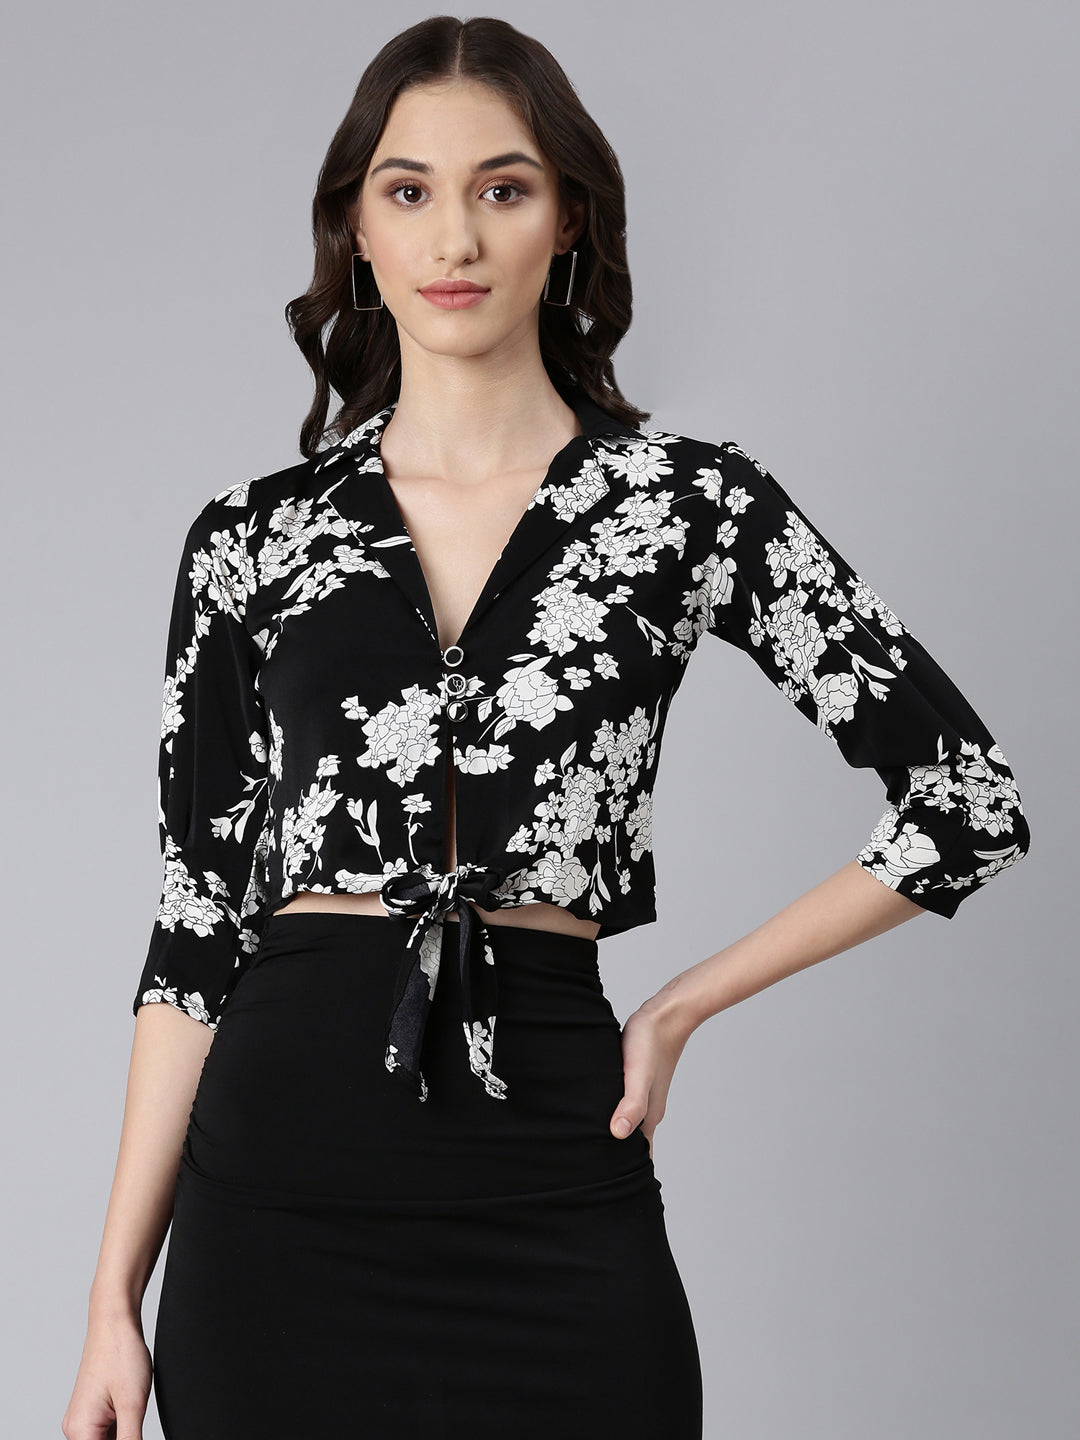 Women Black Floral Shirt Style Crop Top